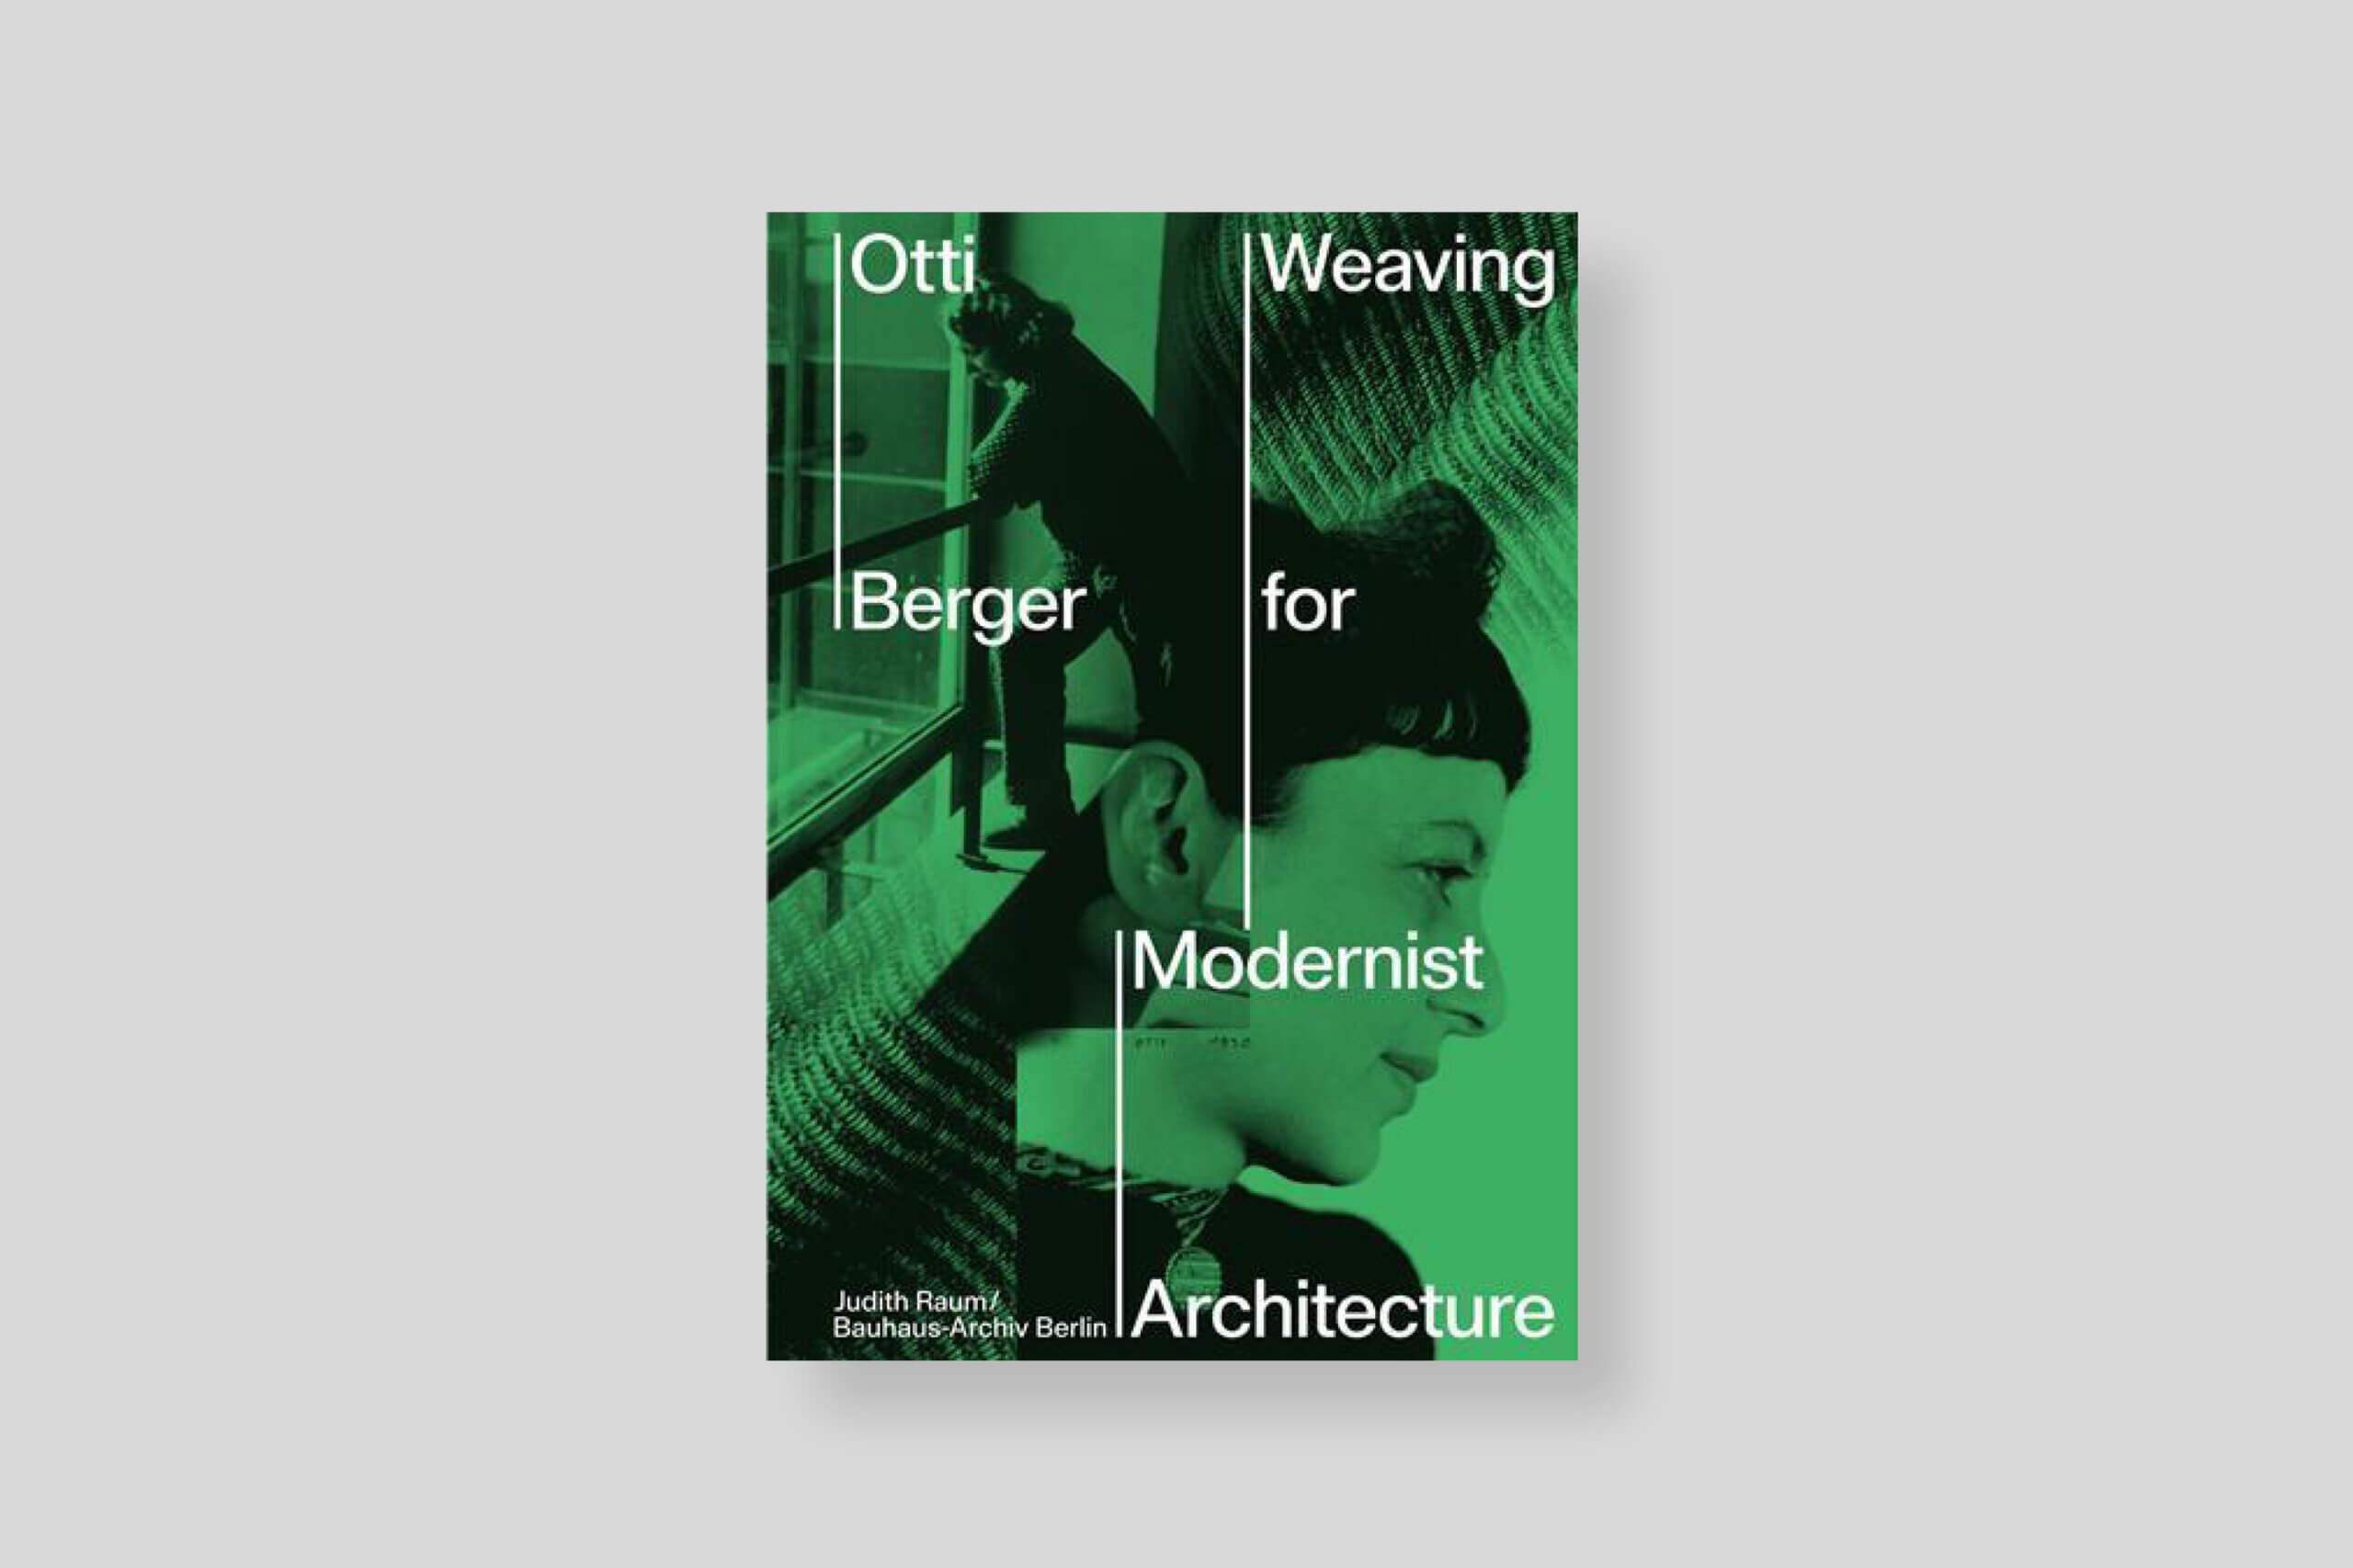 otti-weaving-modernist-architecture-judith-raum-bauhaus-archiv-berlin-cover